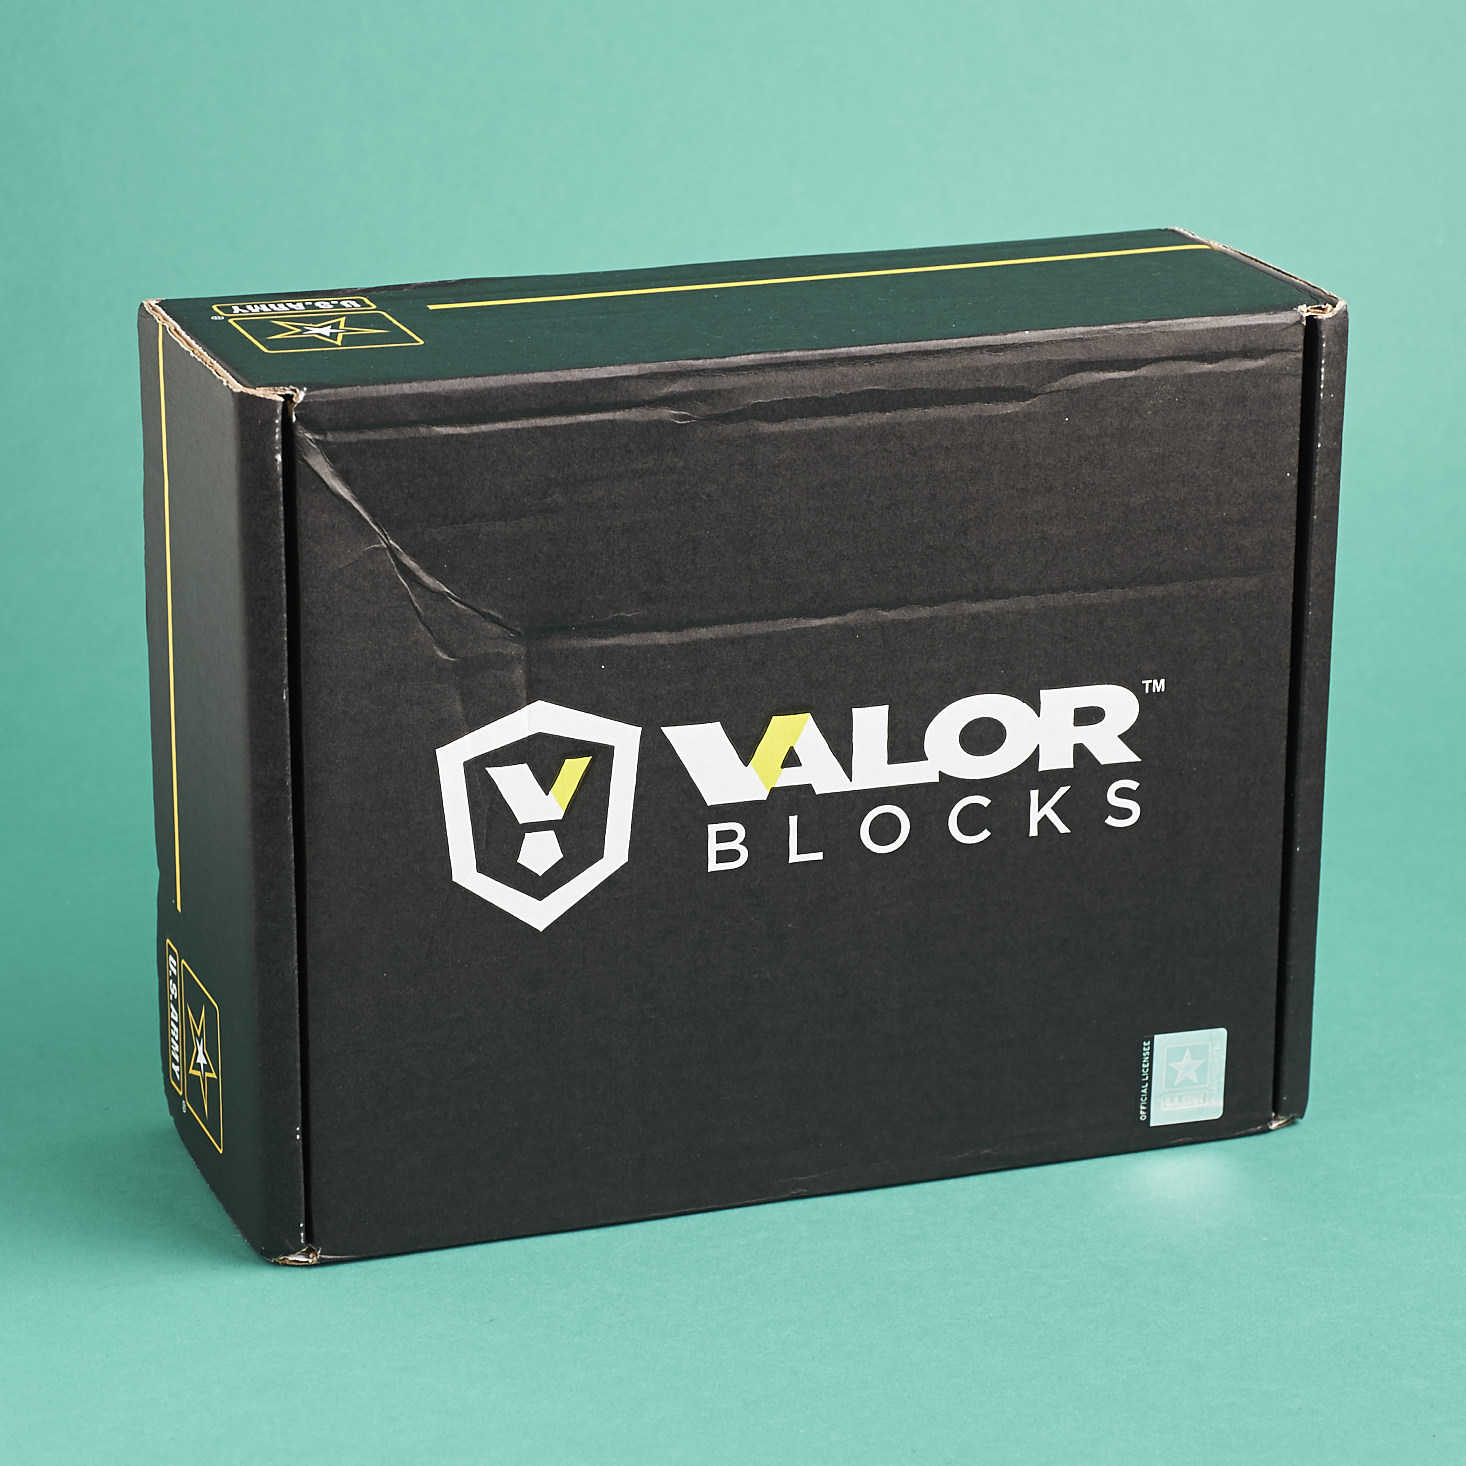 Valor Blocks Subscription Box Review – March 2017